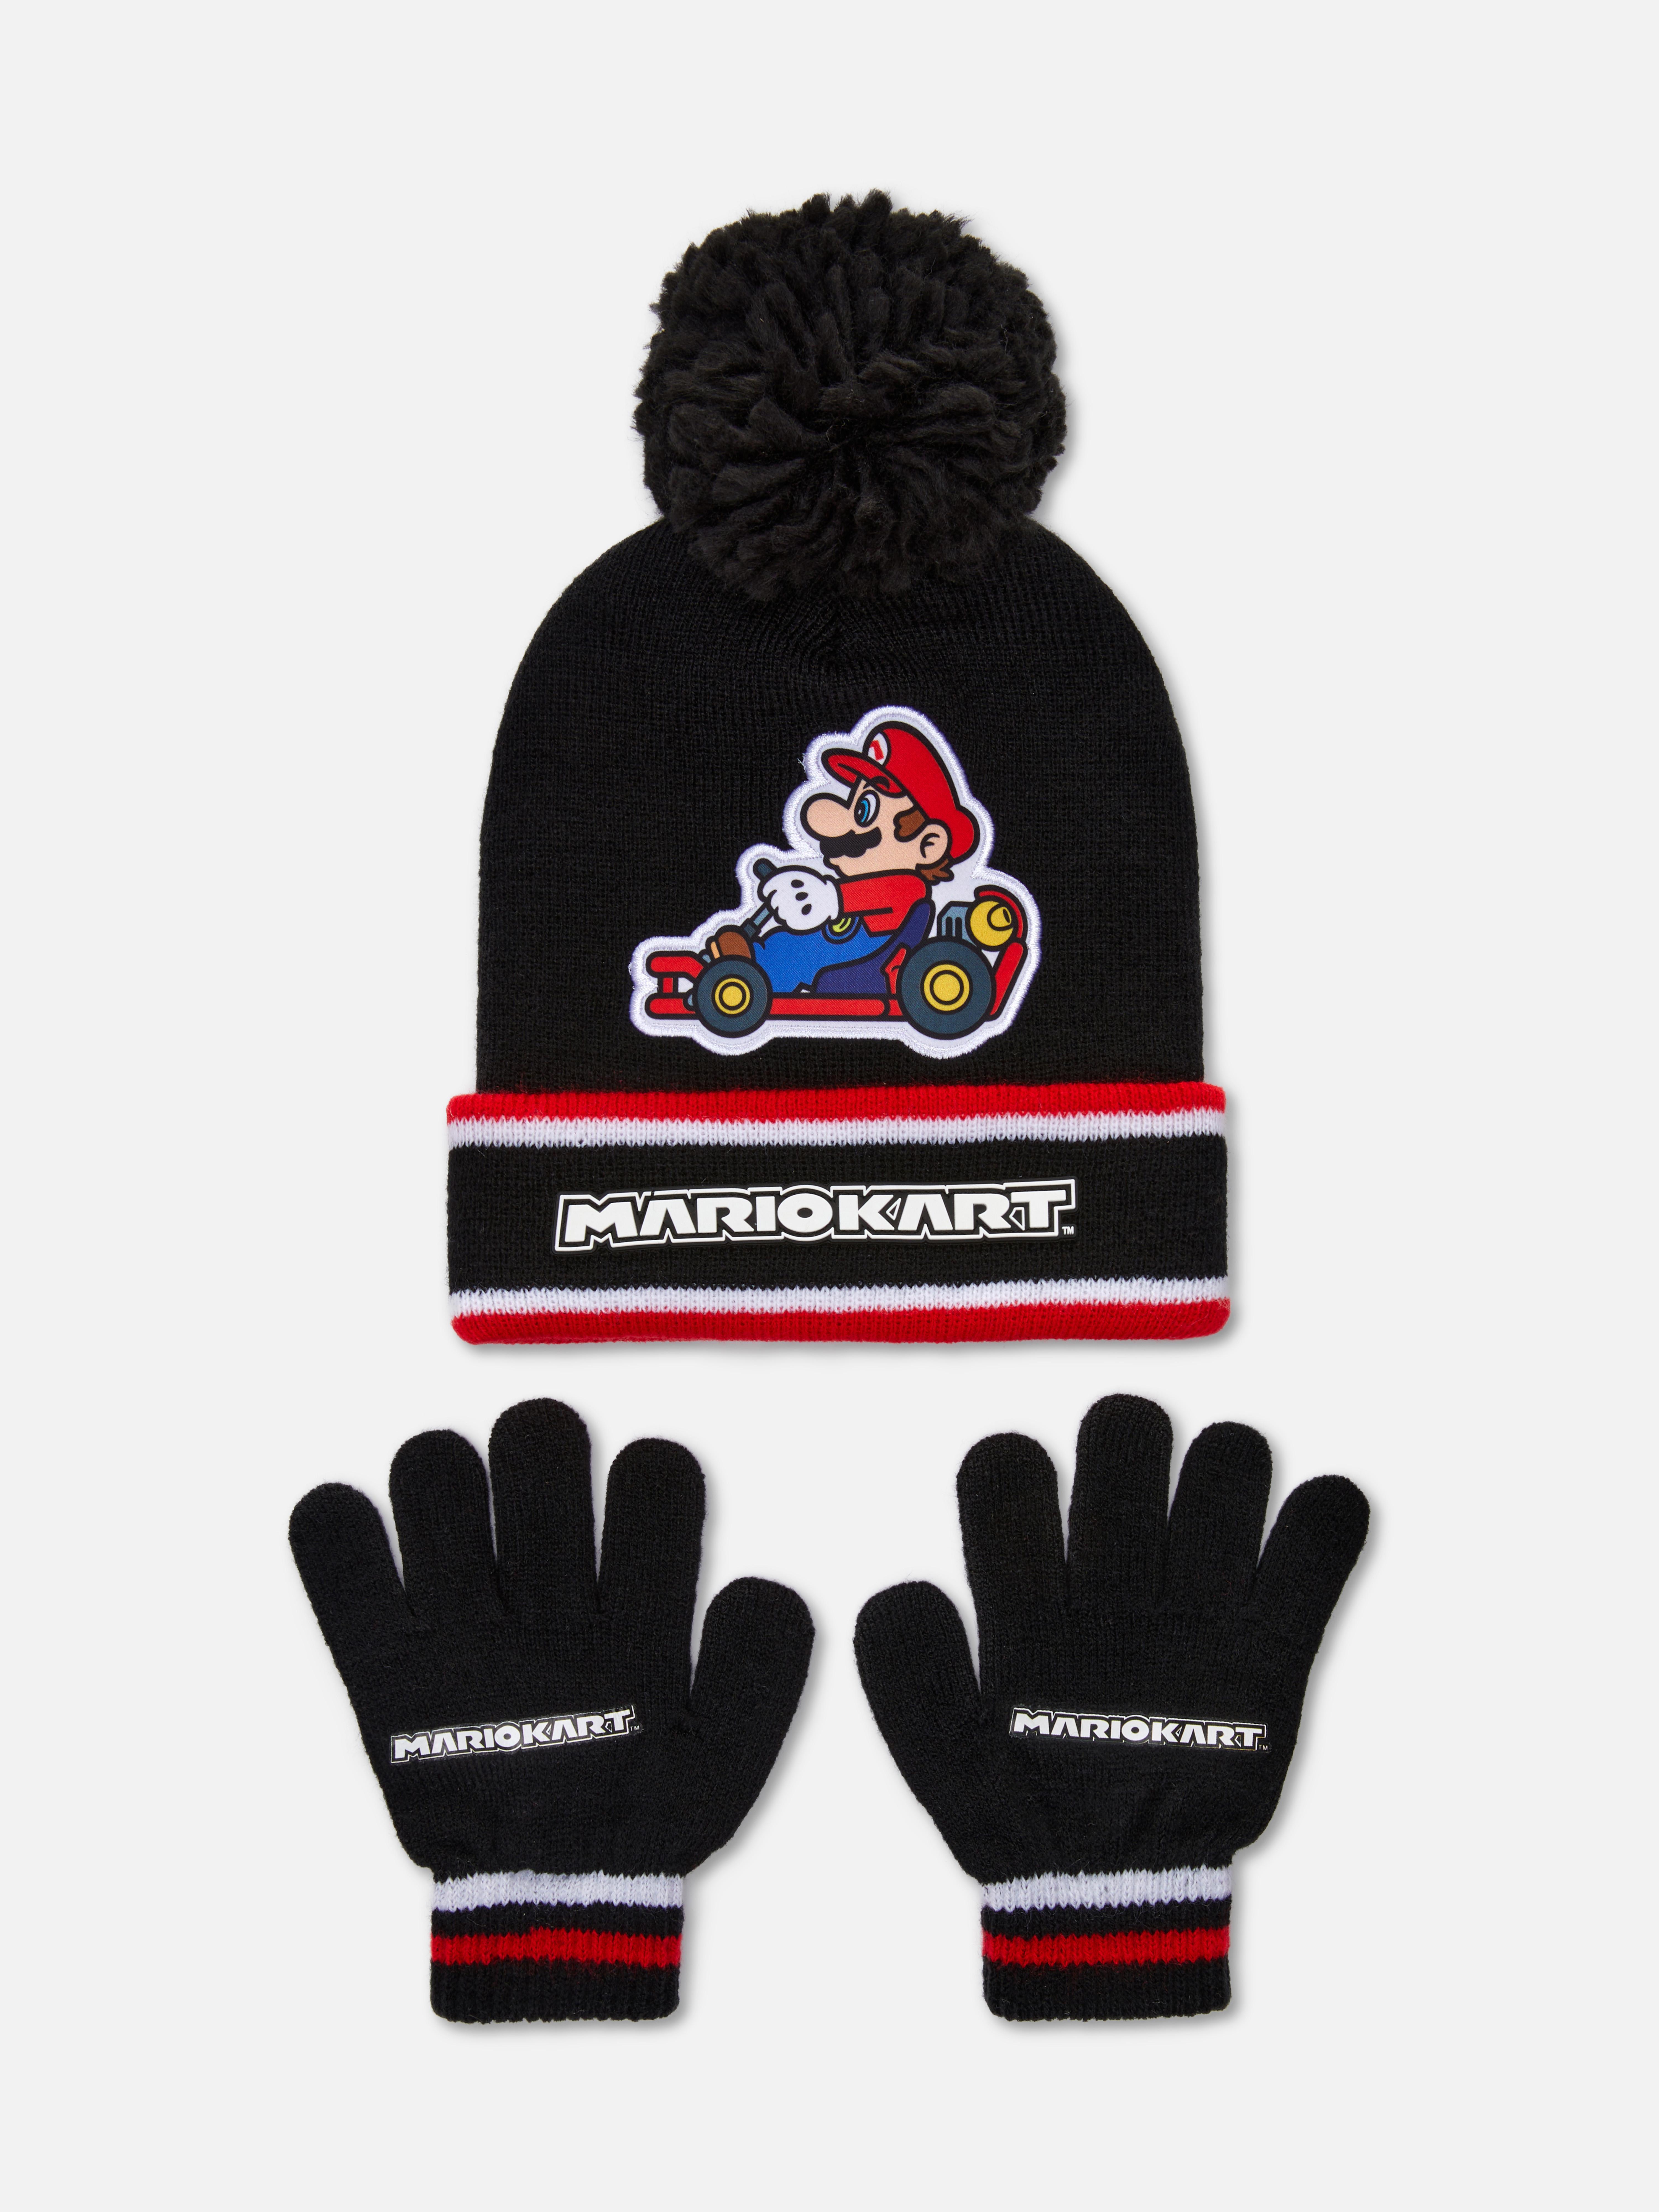 Mario Kart Knitted Gloves and Beanie Set Black